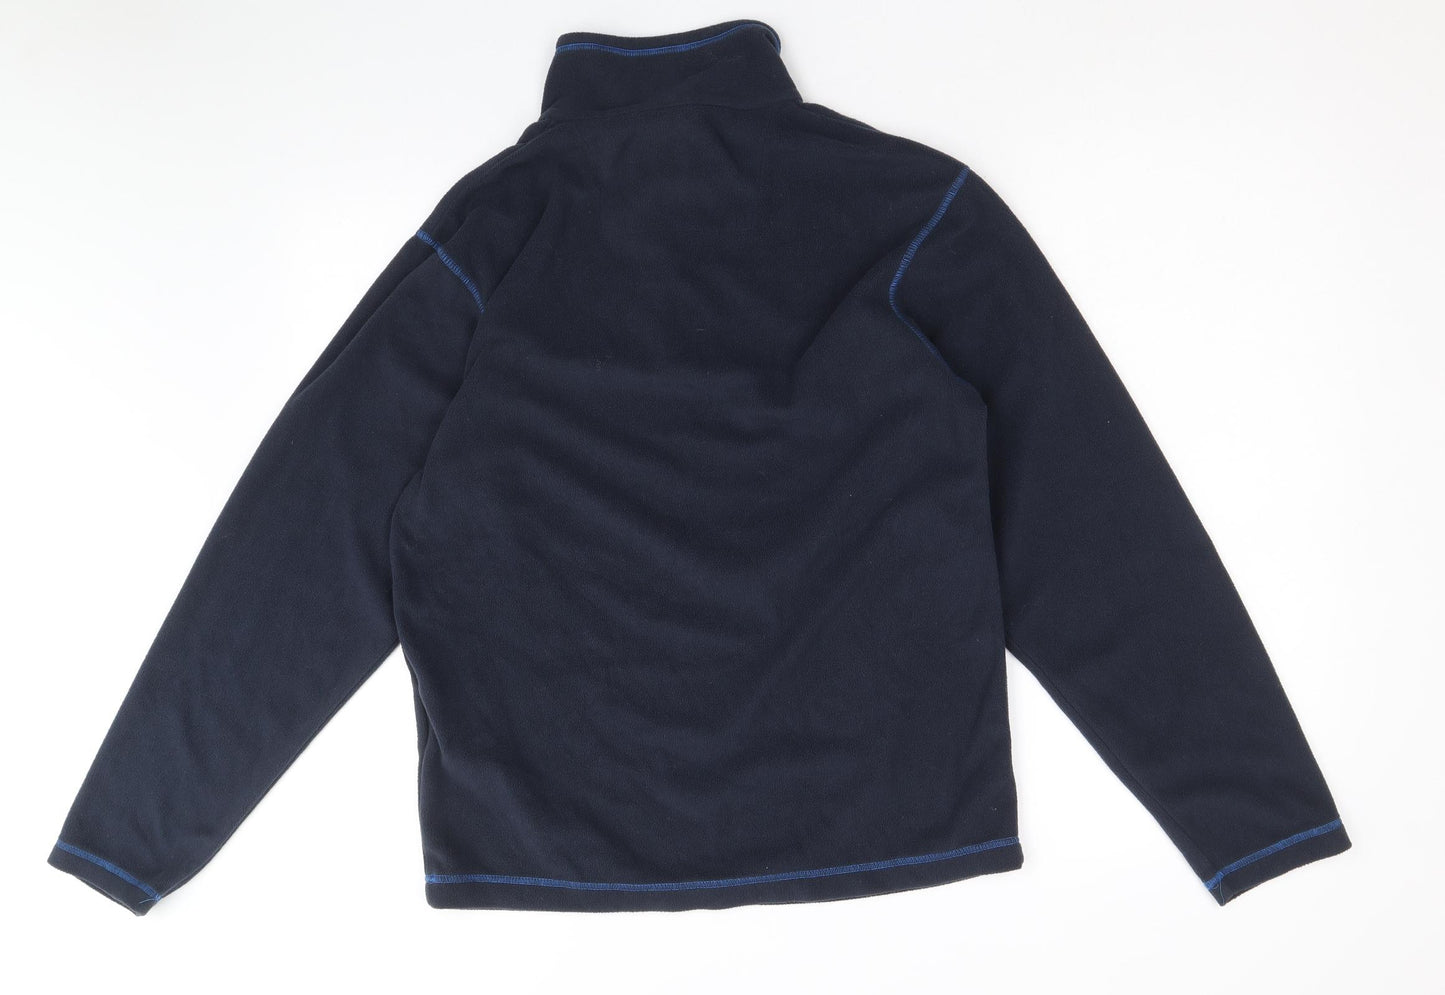 Regatta Mens Blue Polyester Pullover Sweatshirt Size S